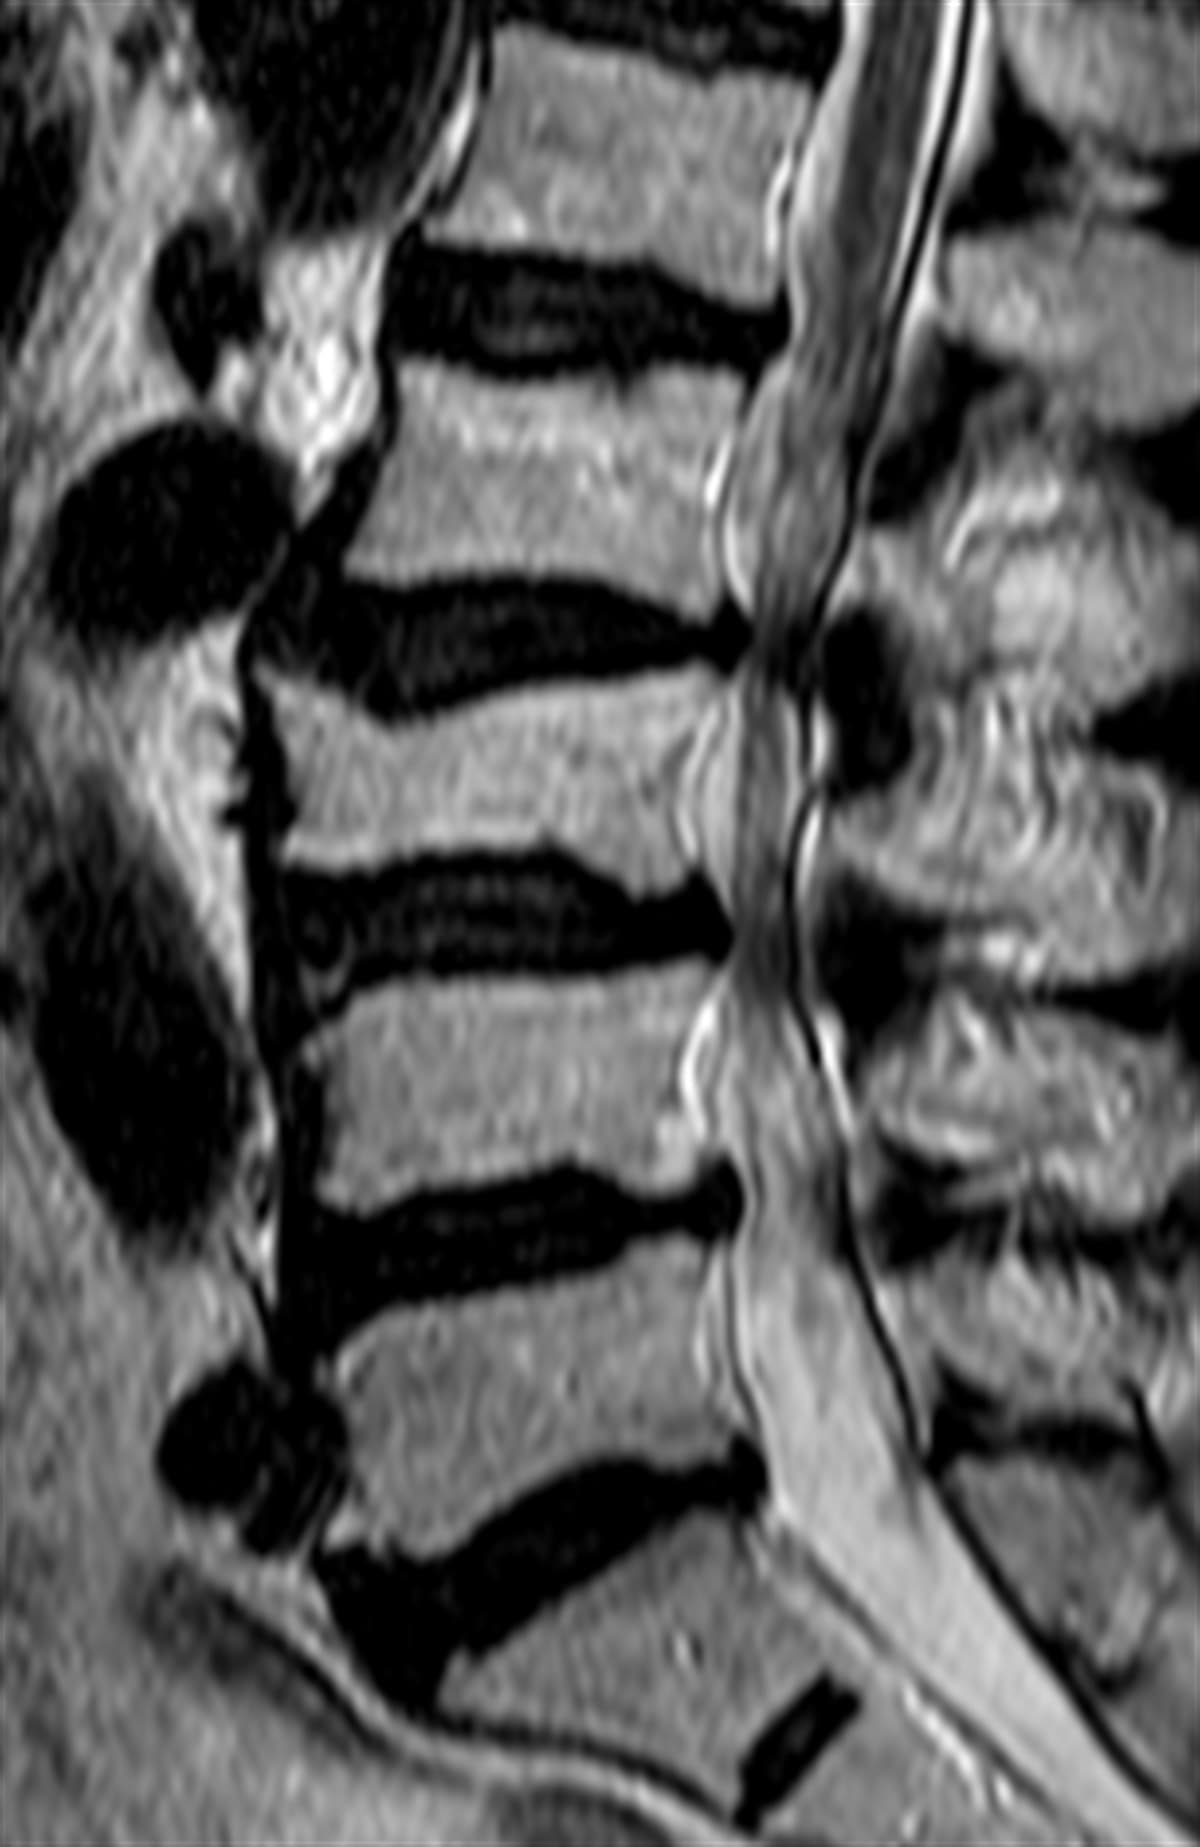 Kanal Darlığı (Spinal Stenoz)